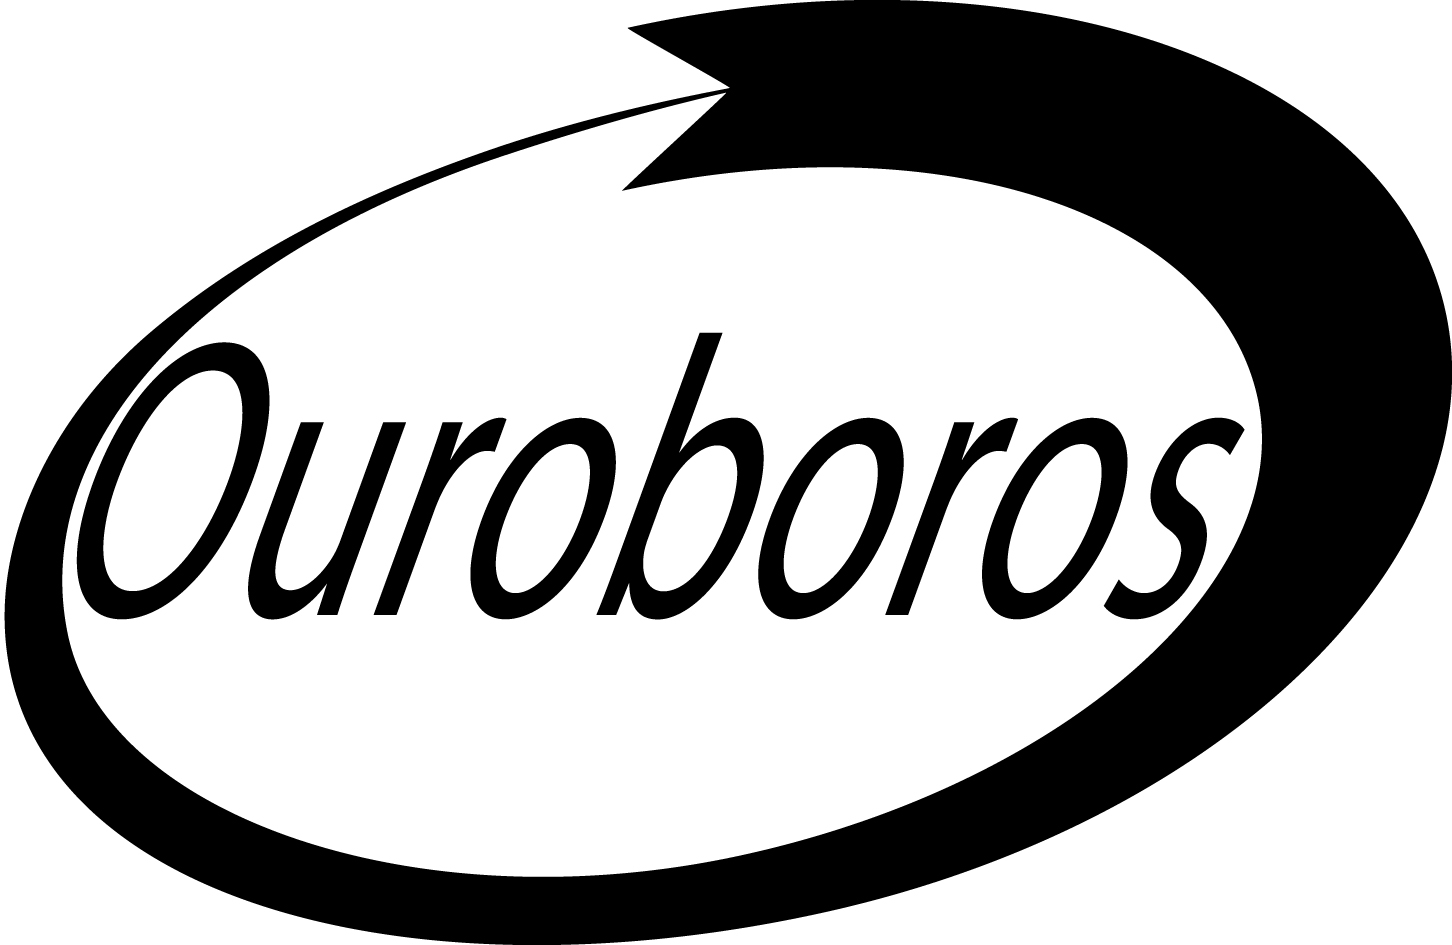 Ouroboros - Homepage